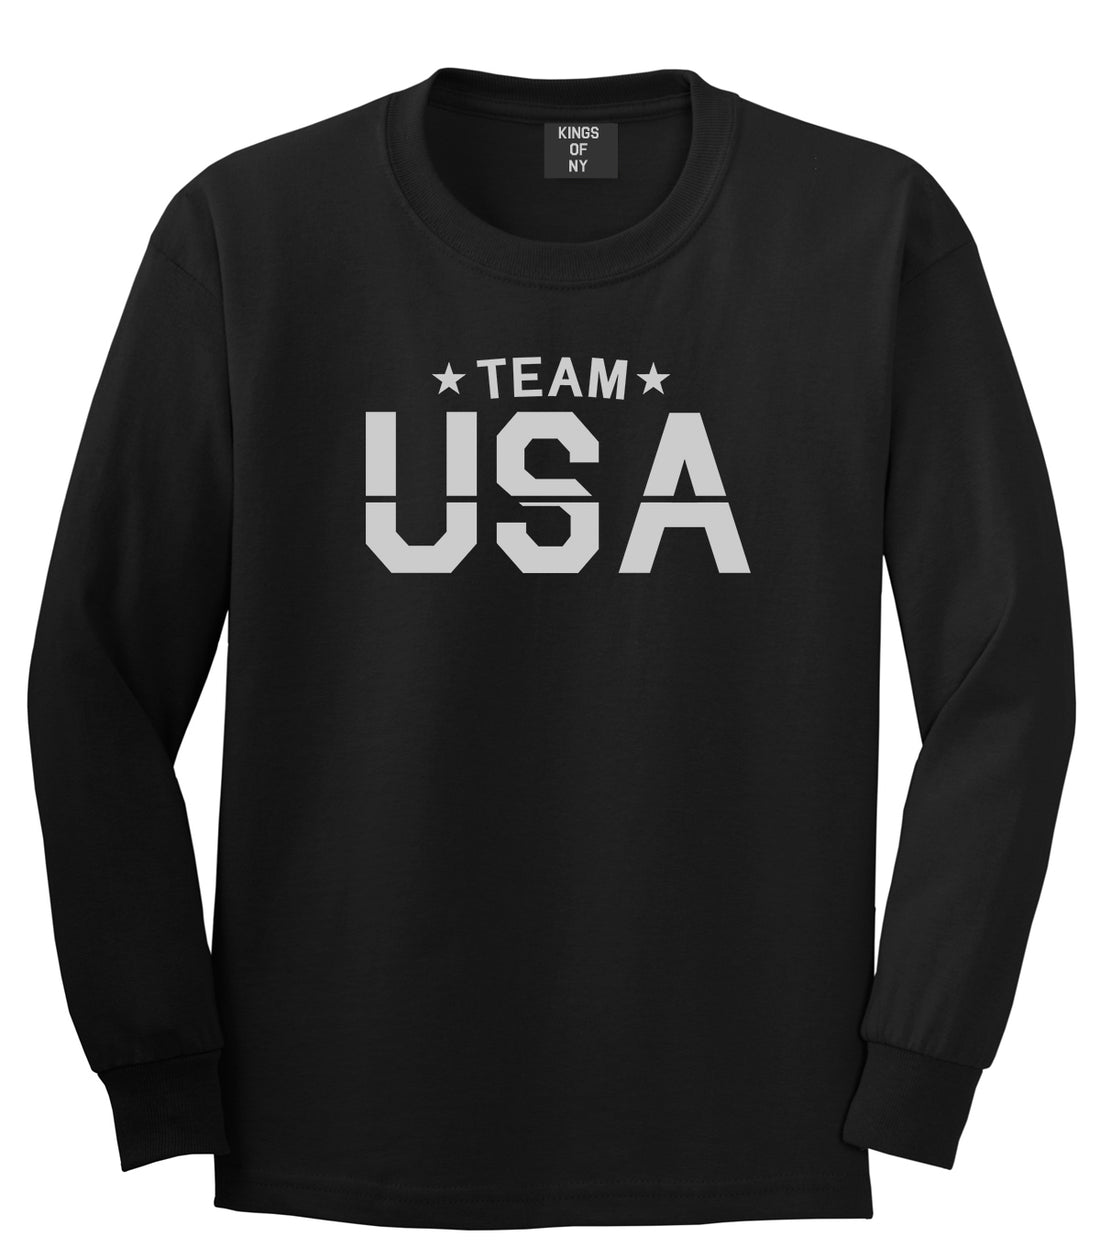 Team USA Mens Long Sleeve T-Shirt Black by Kings Of NY